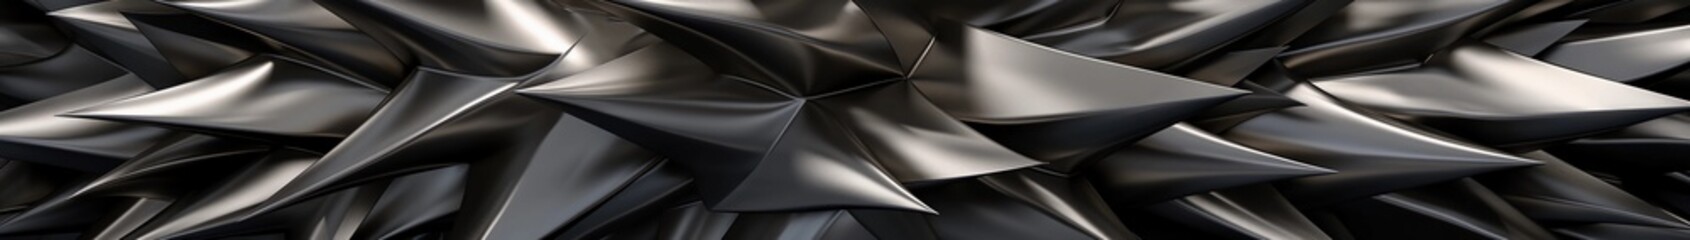 Exotic metal - metallic textures, surfaces & structures